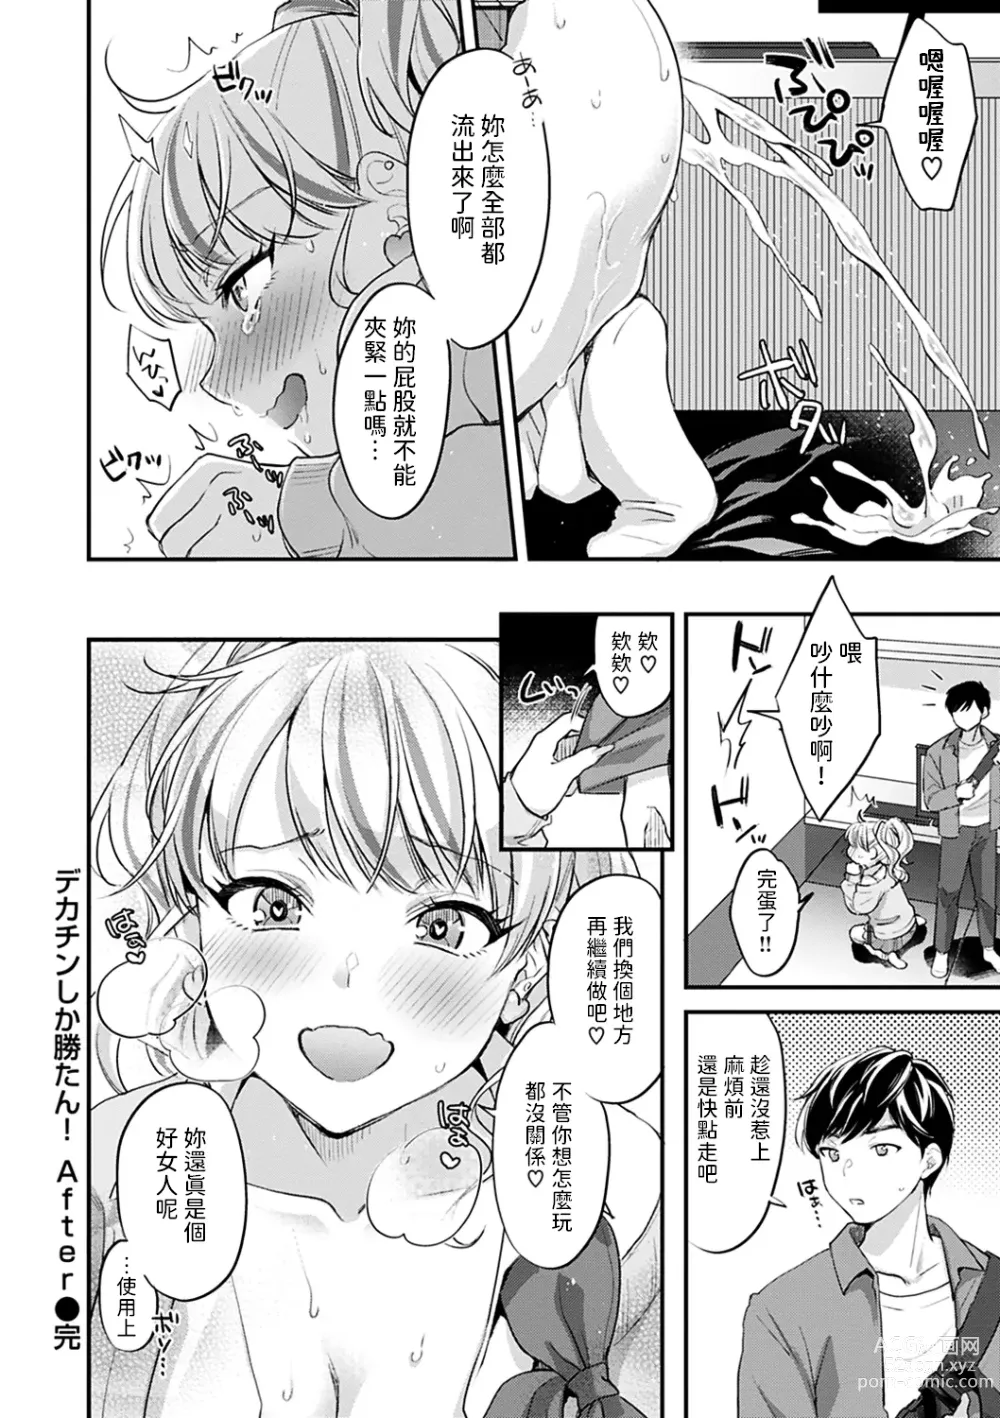 Page 36 of manga Deka Chin Shika Katan!